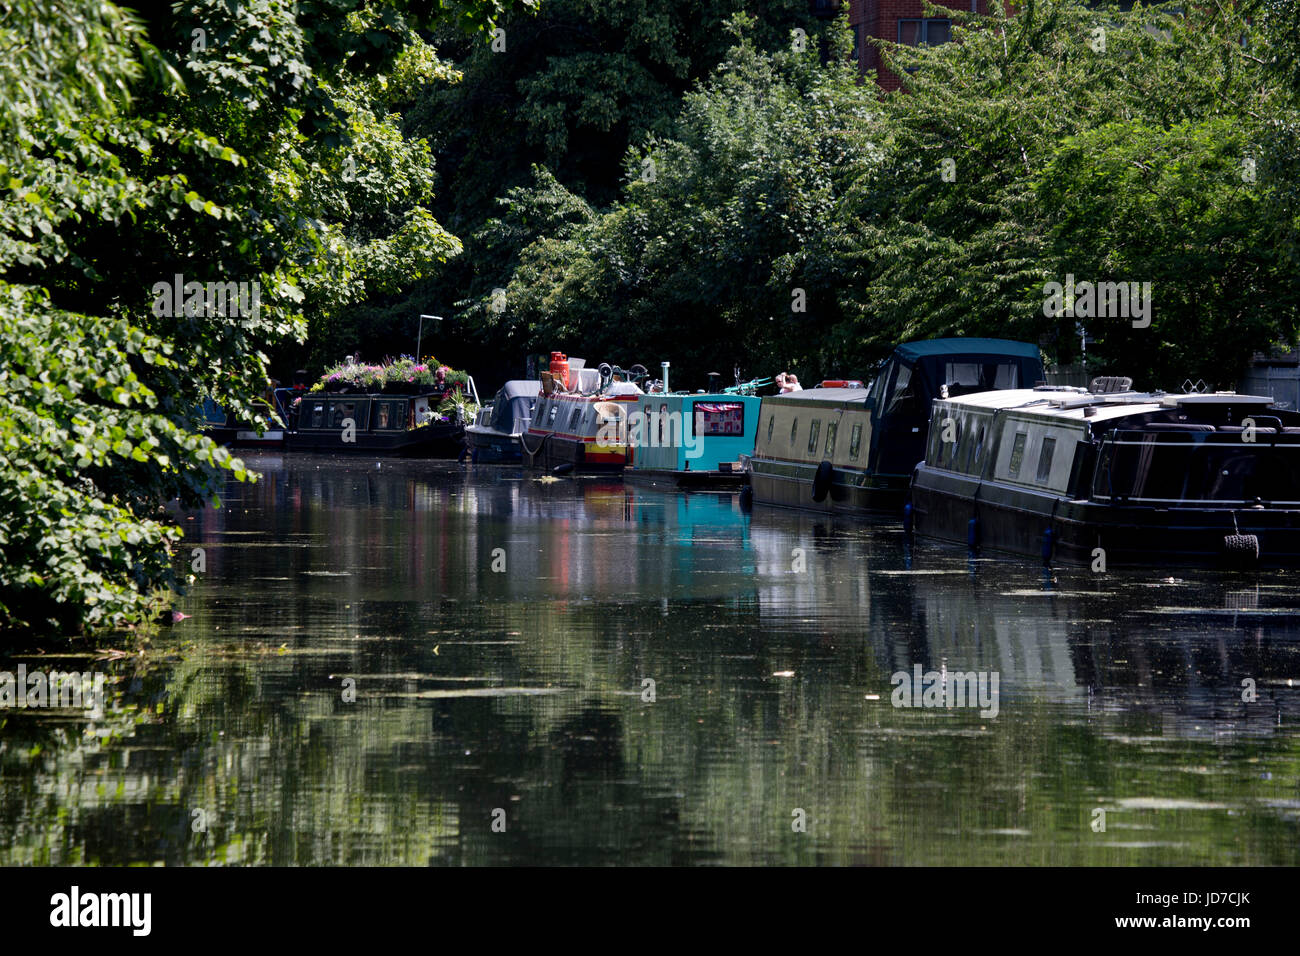 London, UK. 19. Juni 2017. UK-Wetter: Hitzewelle in London. Notting Hill. Meanwhite Park und Canal Credit: Sebastian Remme/Alamy Live News Stockfoto